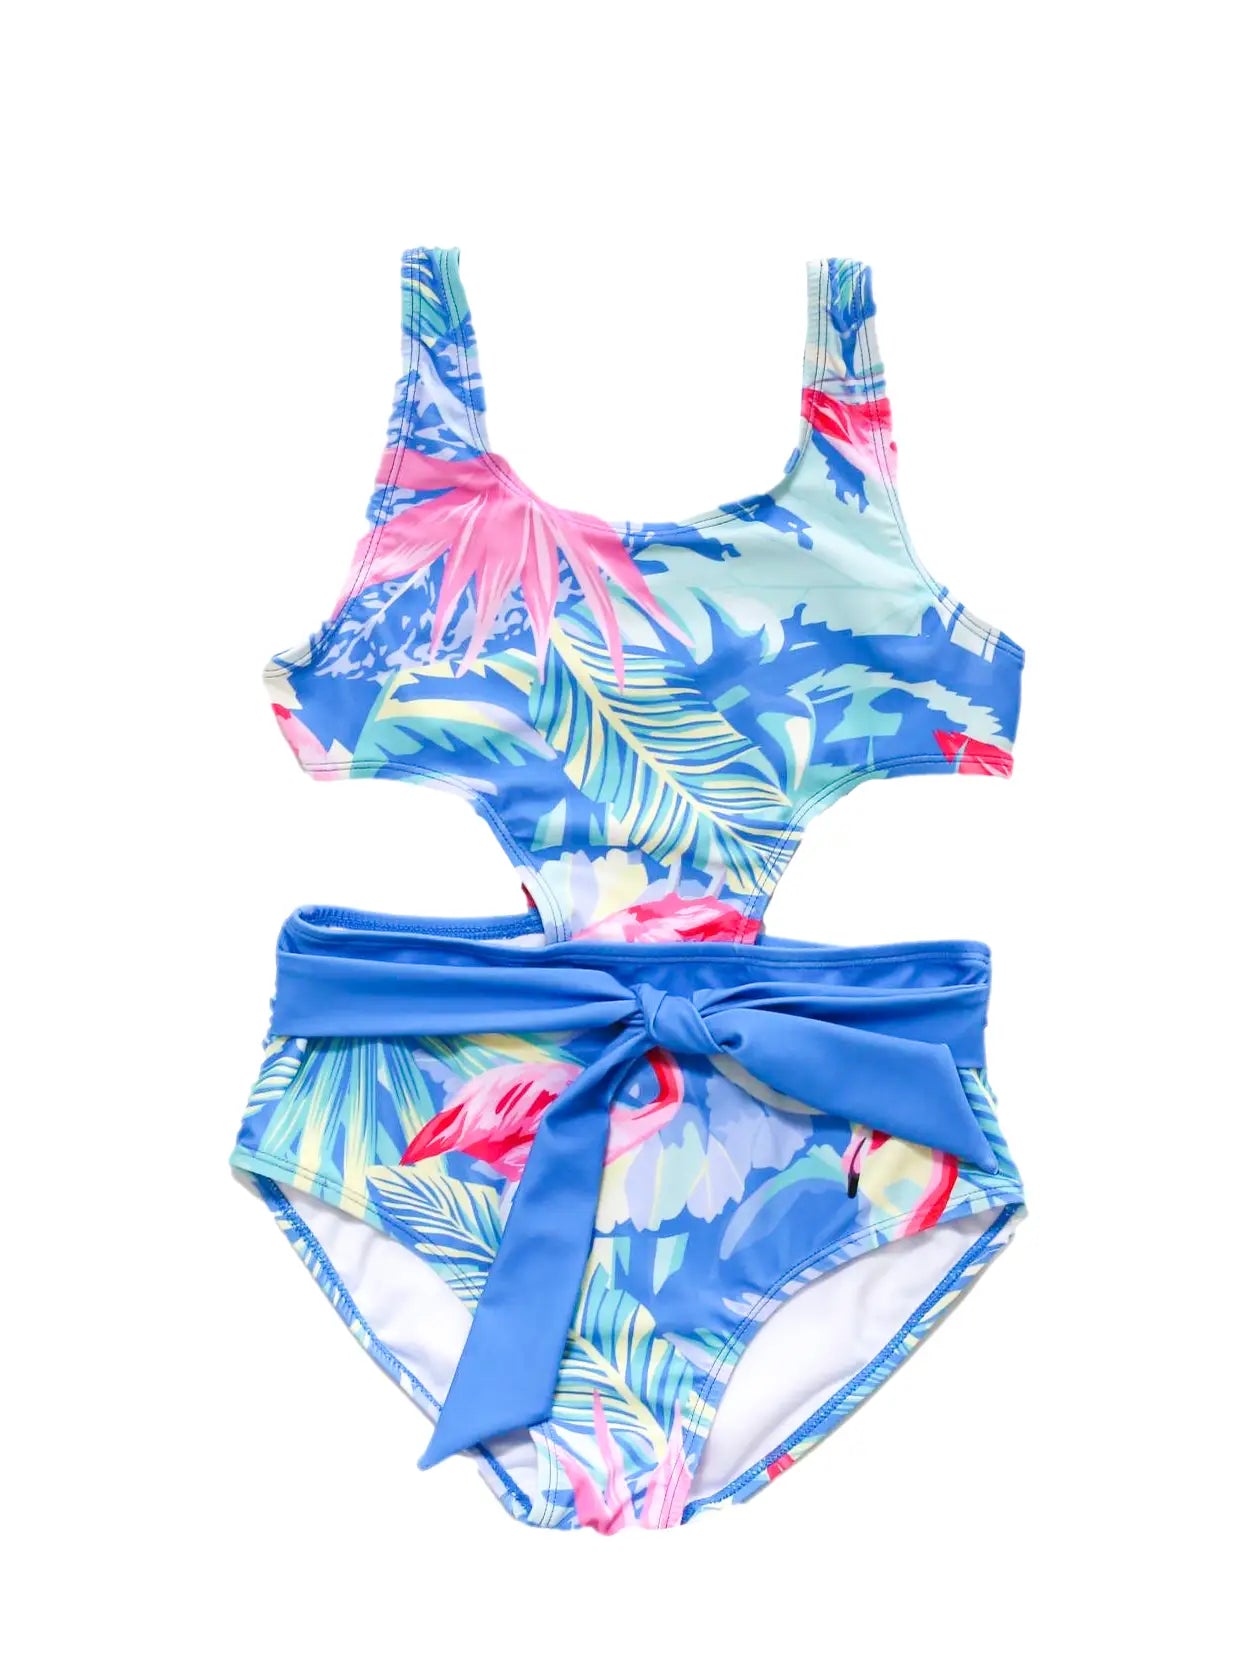 Girls- Blueberry Bay Aqua Lavida One Piece Swimsuit Swimwear